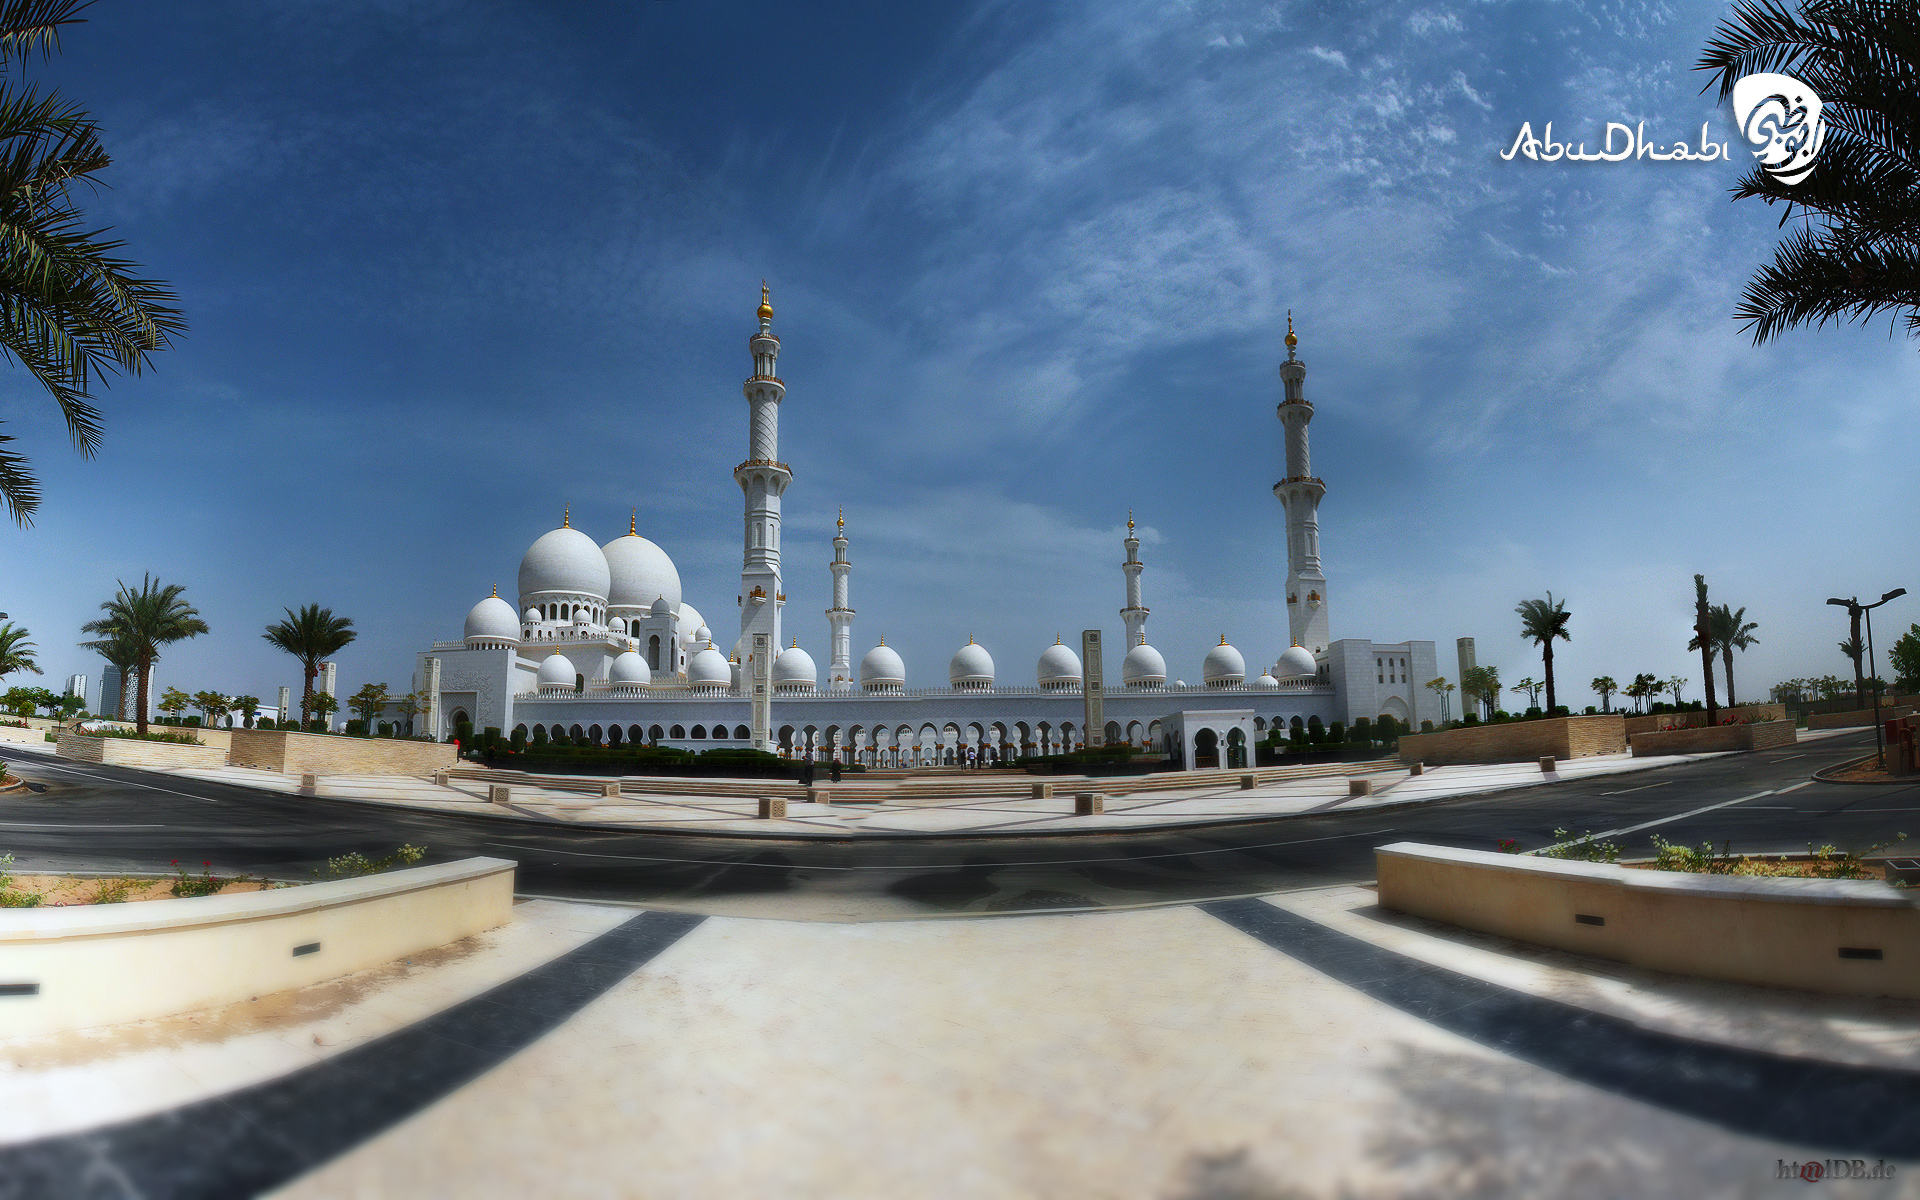 Abu dhabi Grand Mosque outside